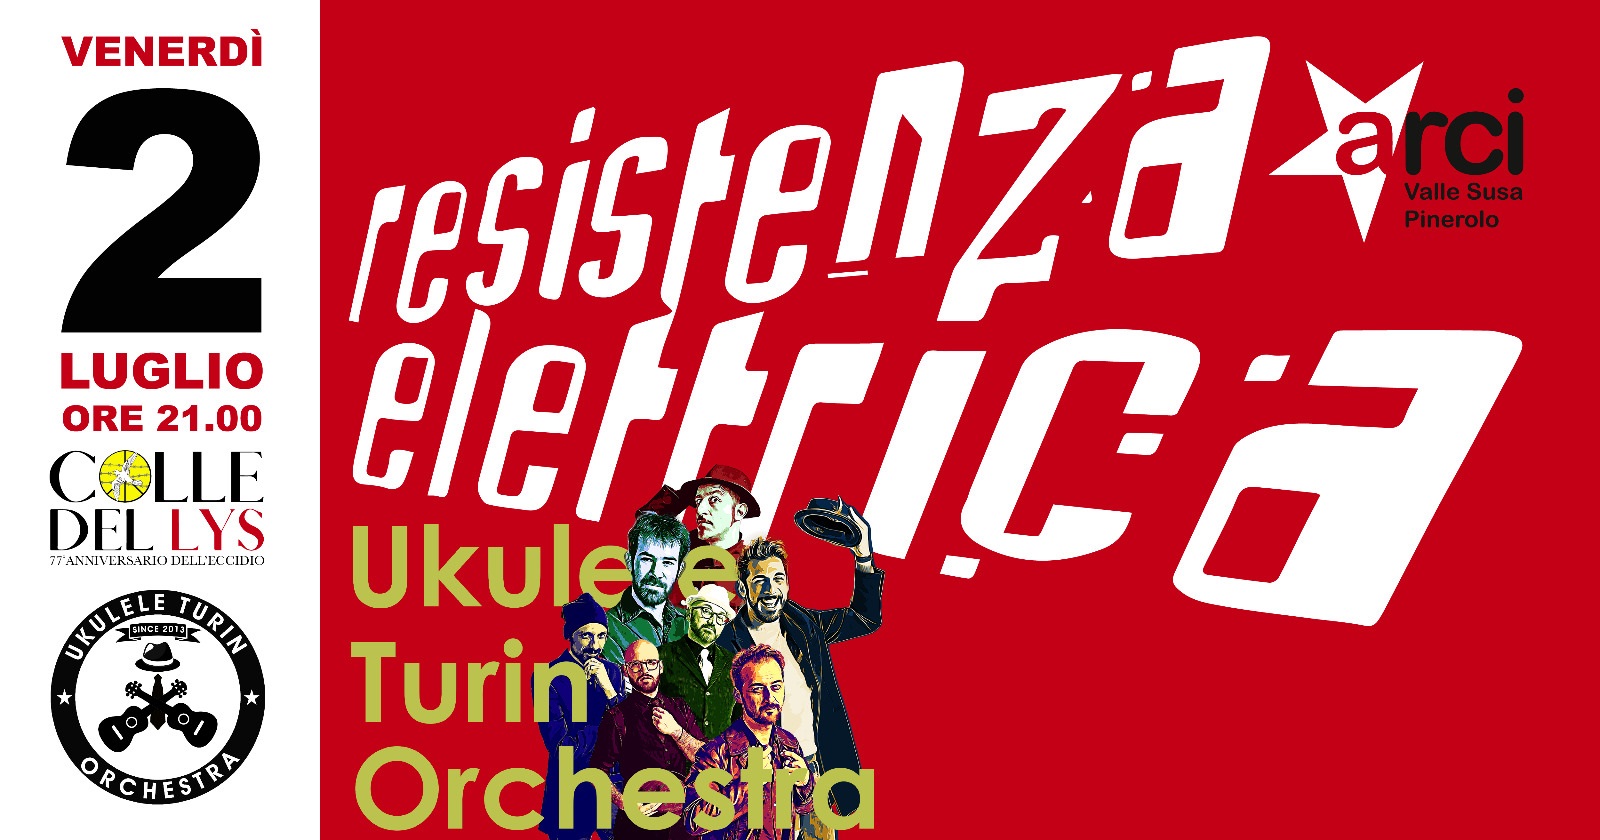 ★ Ukulele Turin Orchestra @Resistenza Elettrica 2021 ★